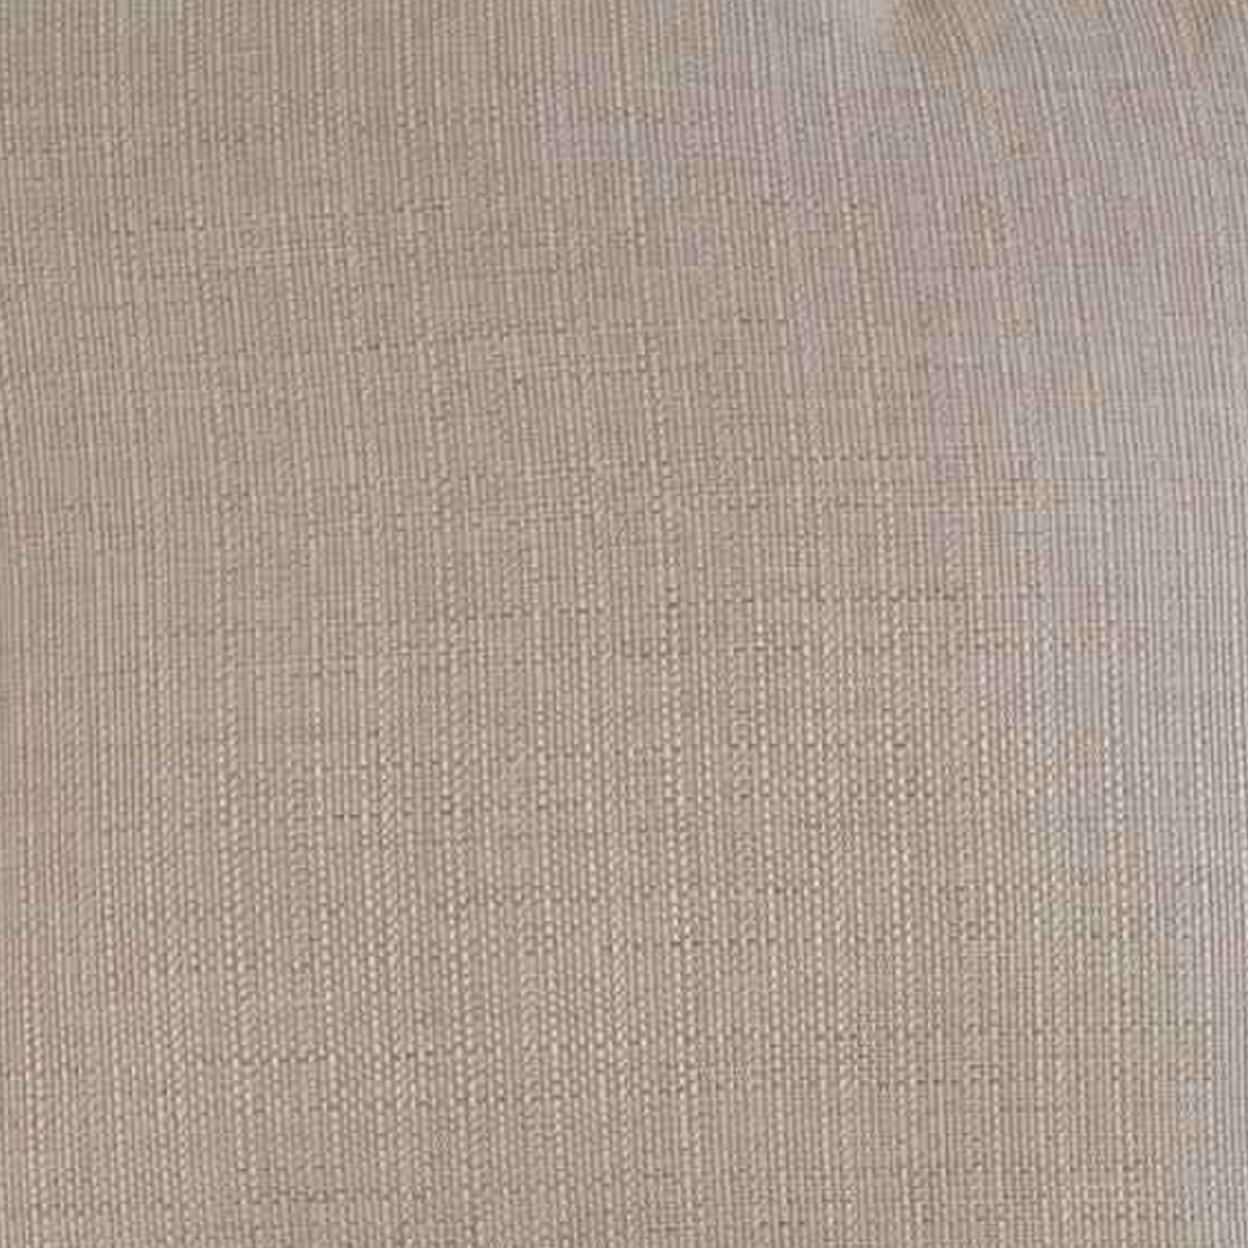 20x 20 Inch Plush Feel Fabric Pillow With Polyester Fiber Fill, Set Of 2, Beige- Saltoro Sherpi